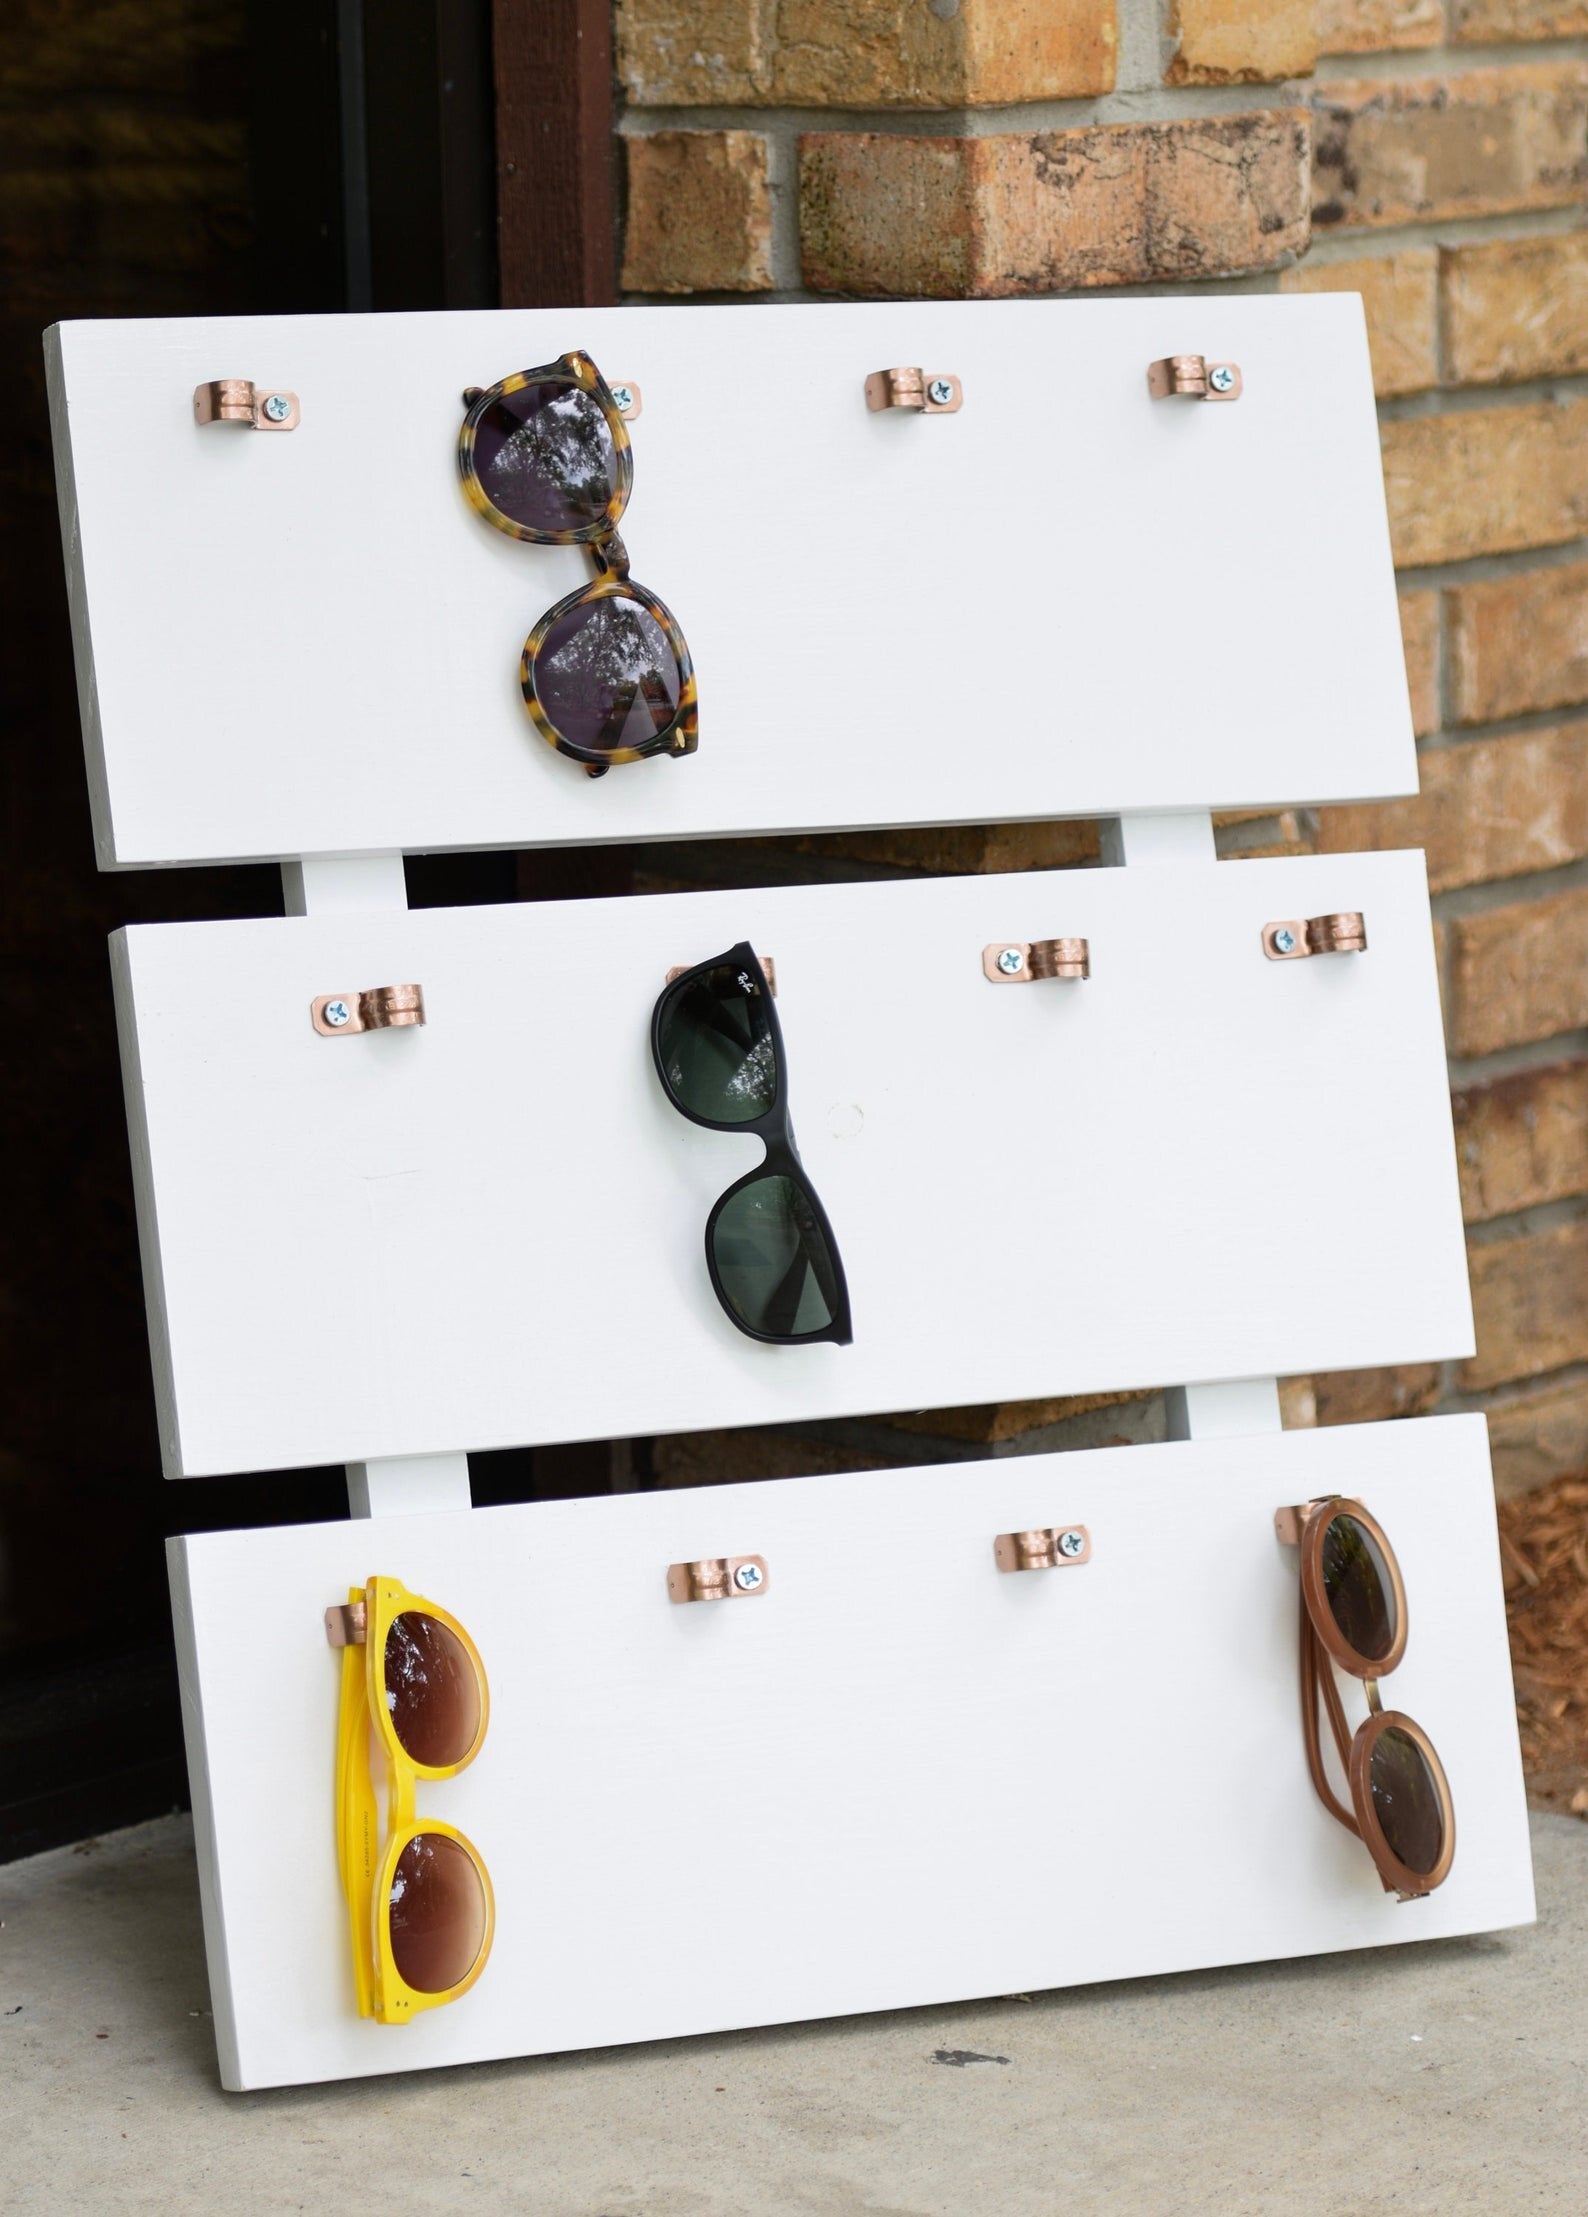 Wood Sunglasses Storage Rack